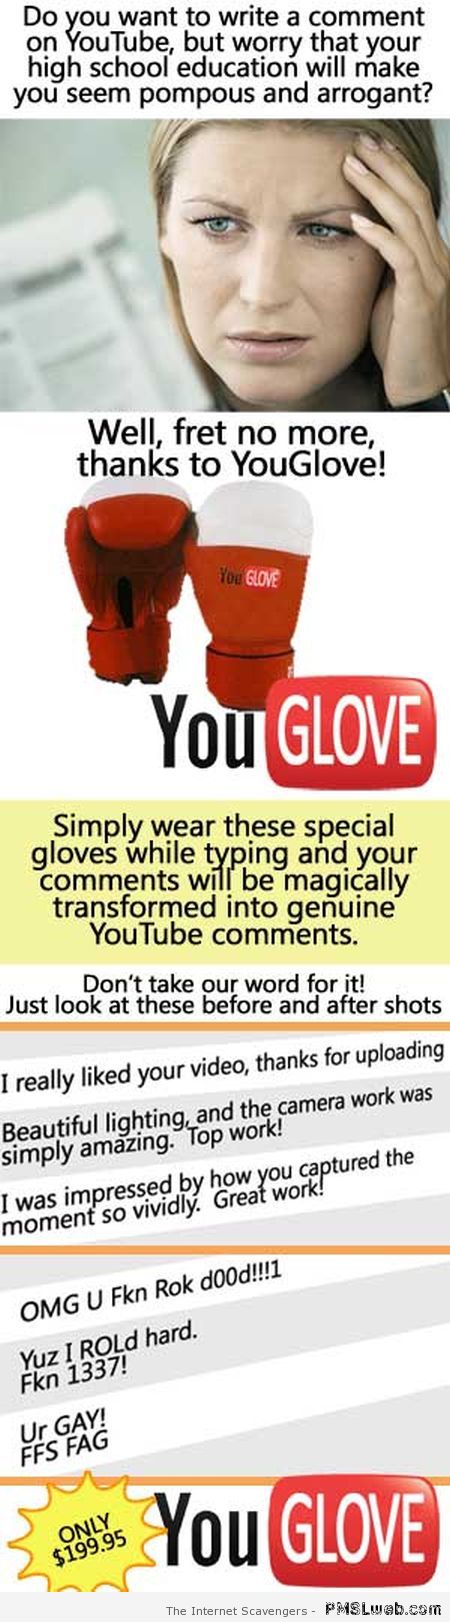 Funny Youtube glove at PMSLweb.com